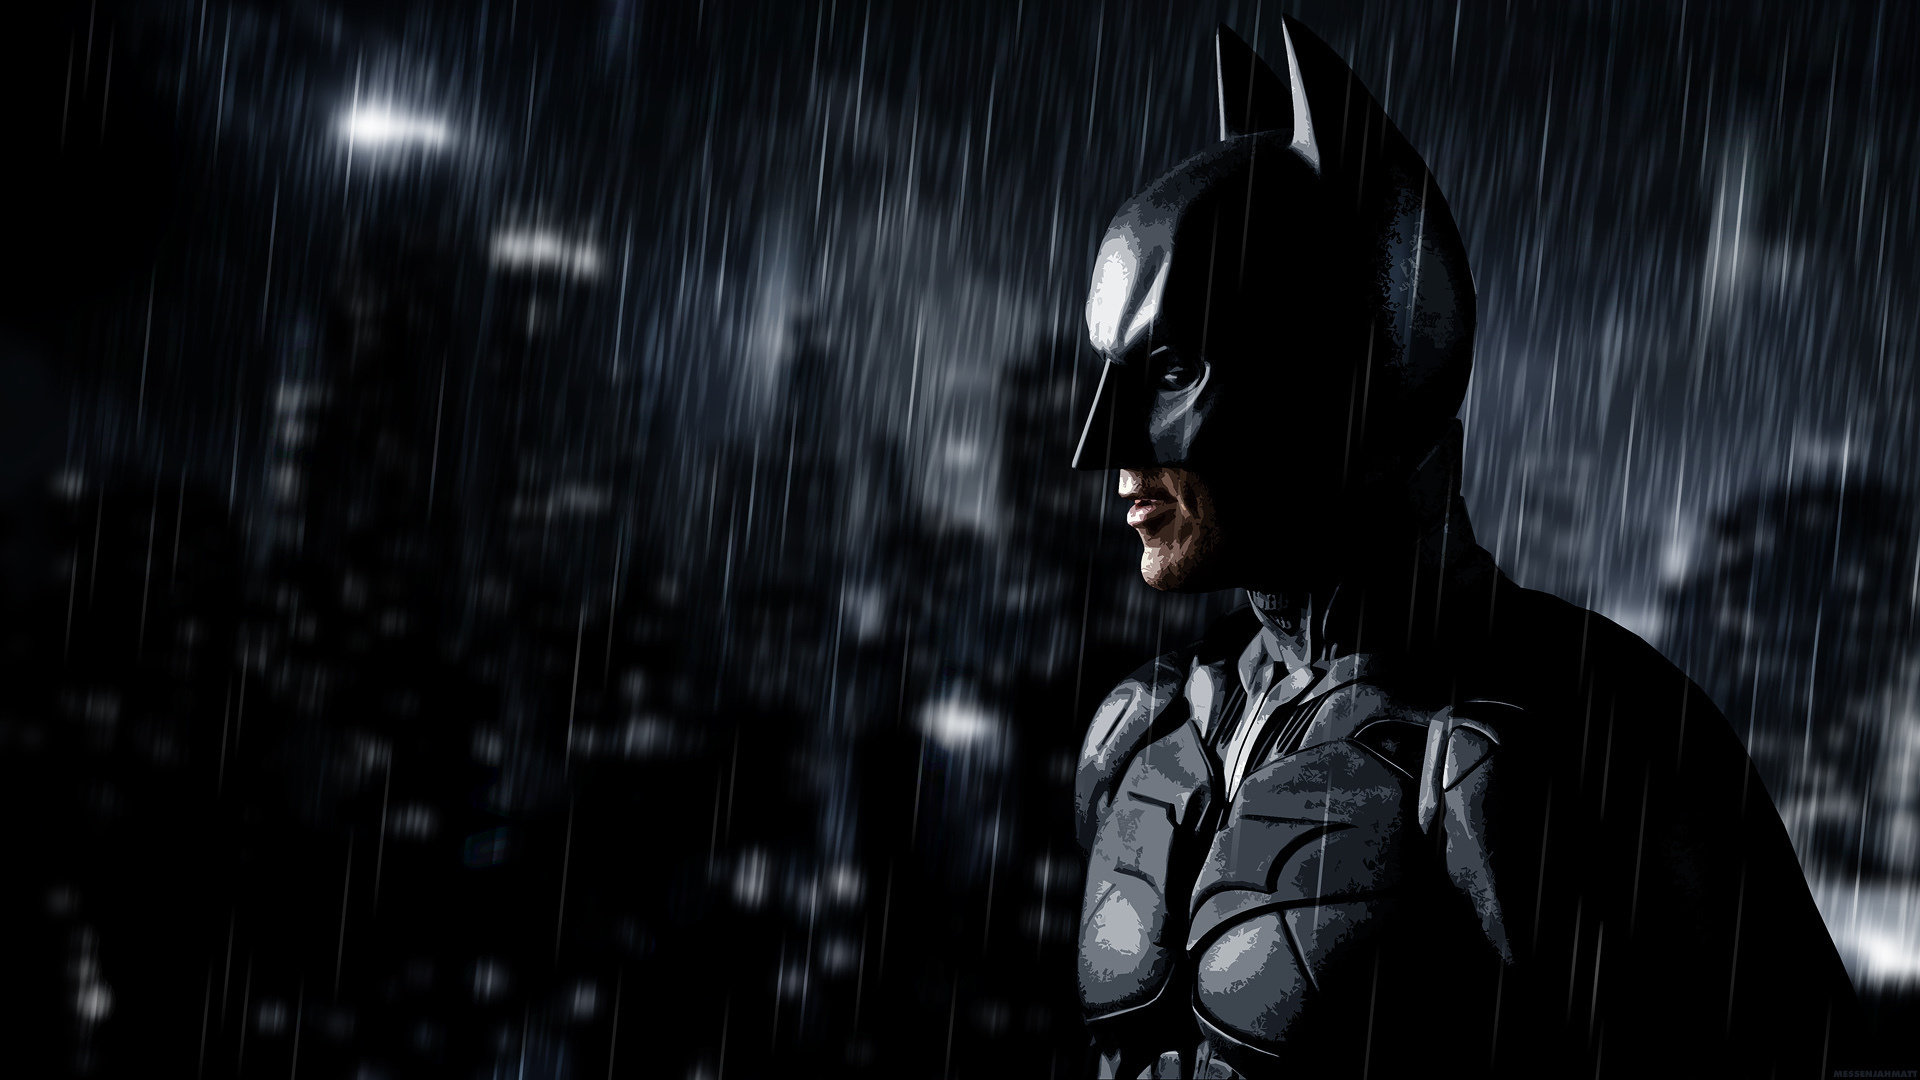 The Dark Knight Rises wallpaper HD for desktop background